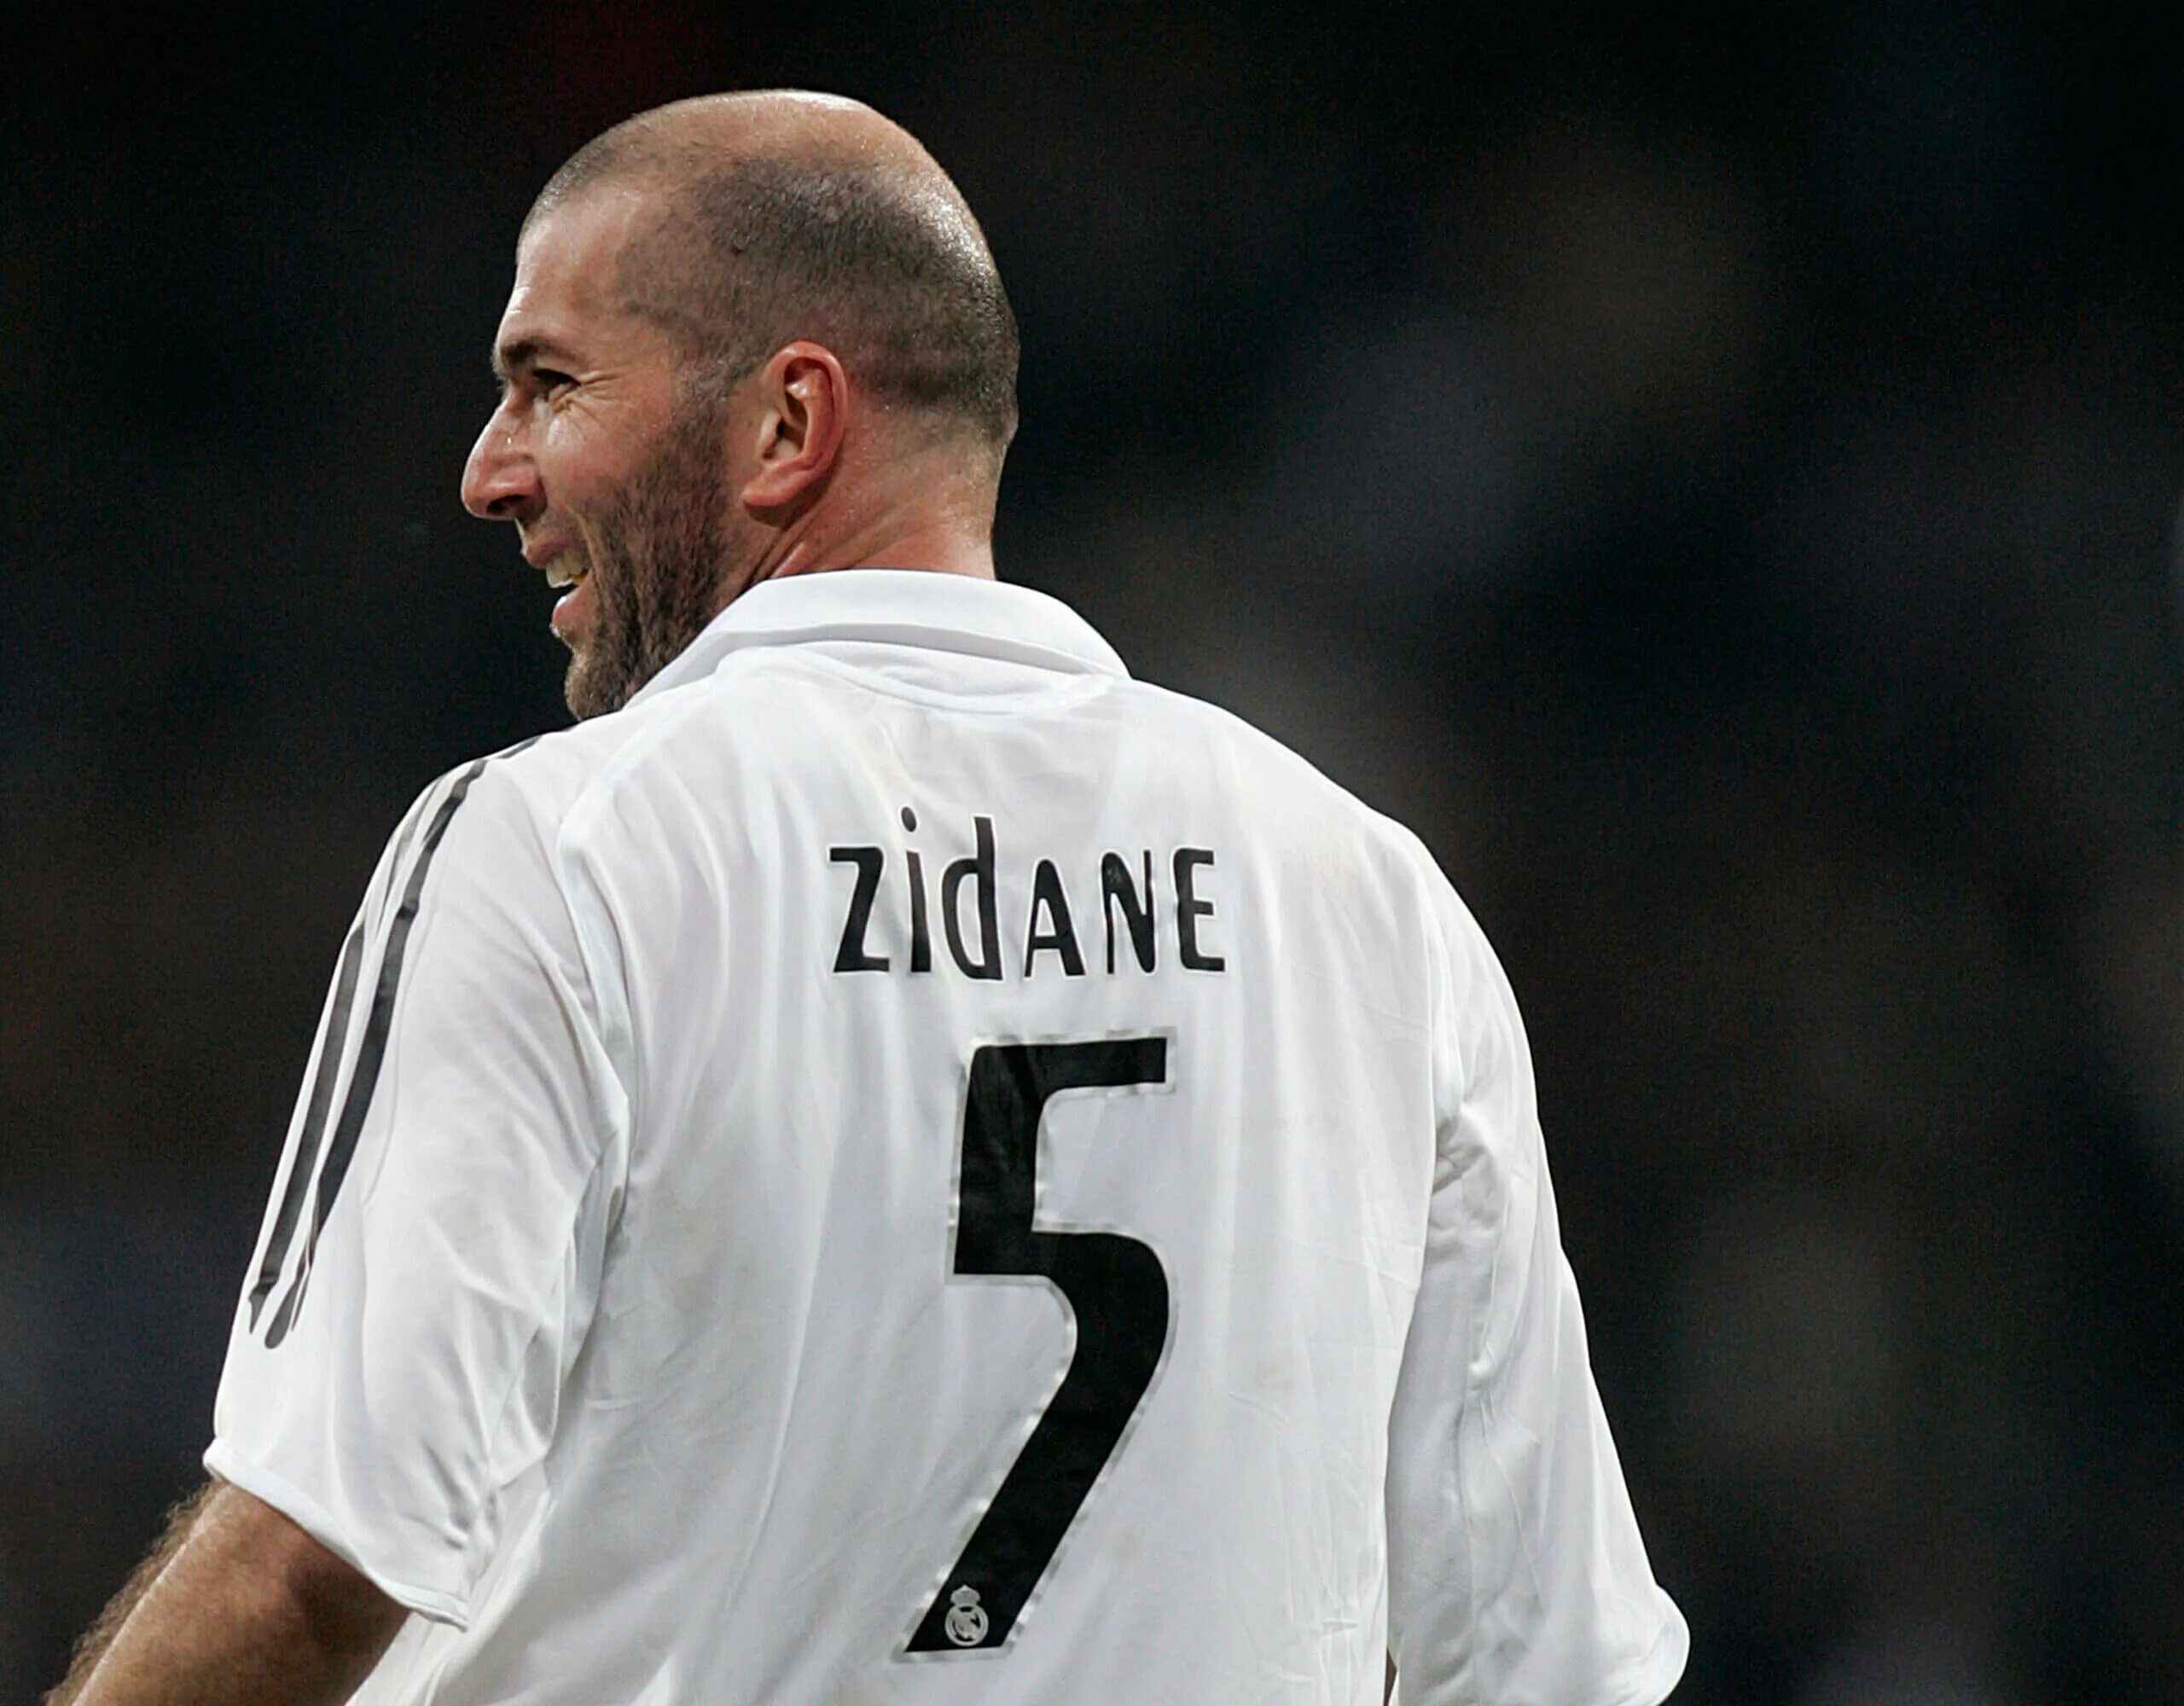 Зидан Реал Мадрид. Zidane real Madrid 5. Зидан 10 номер. Зидан Реал Мадрид игрок. Агент вербующий футболистов 5 букв